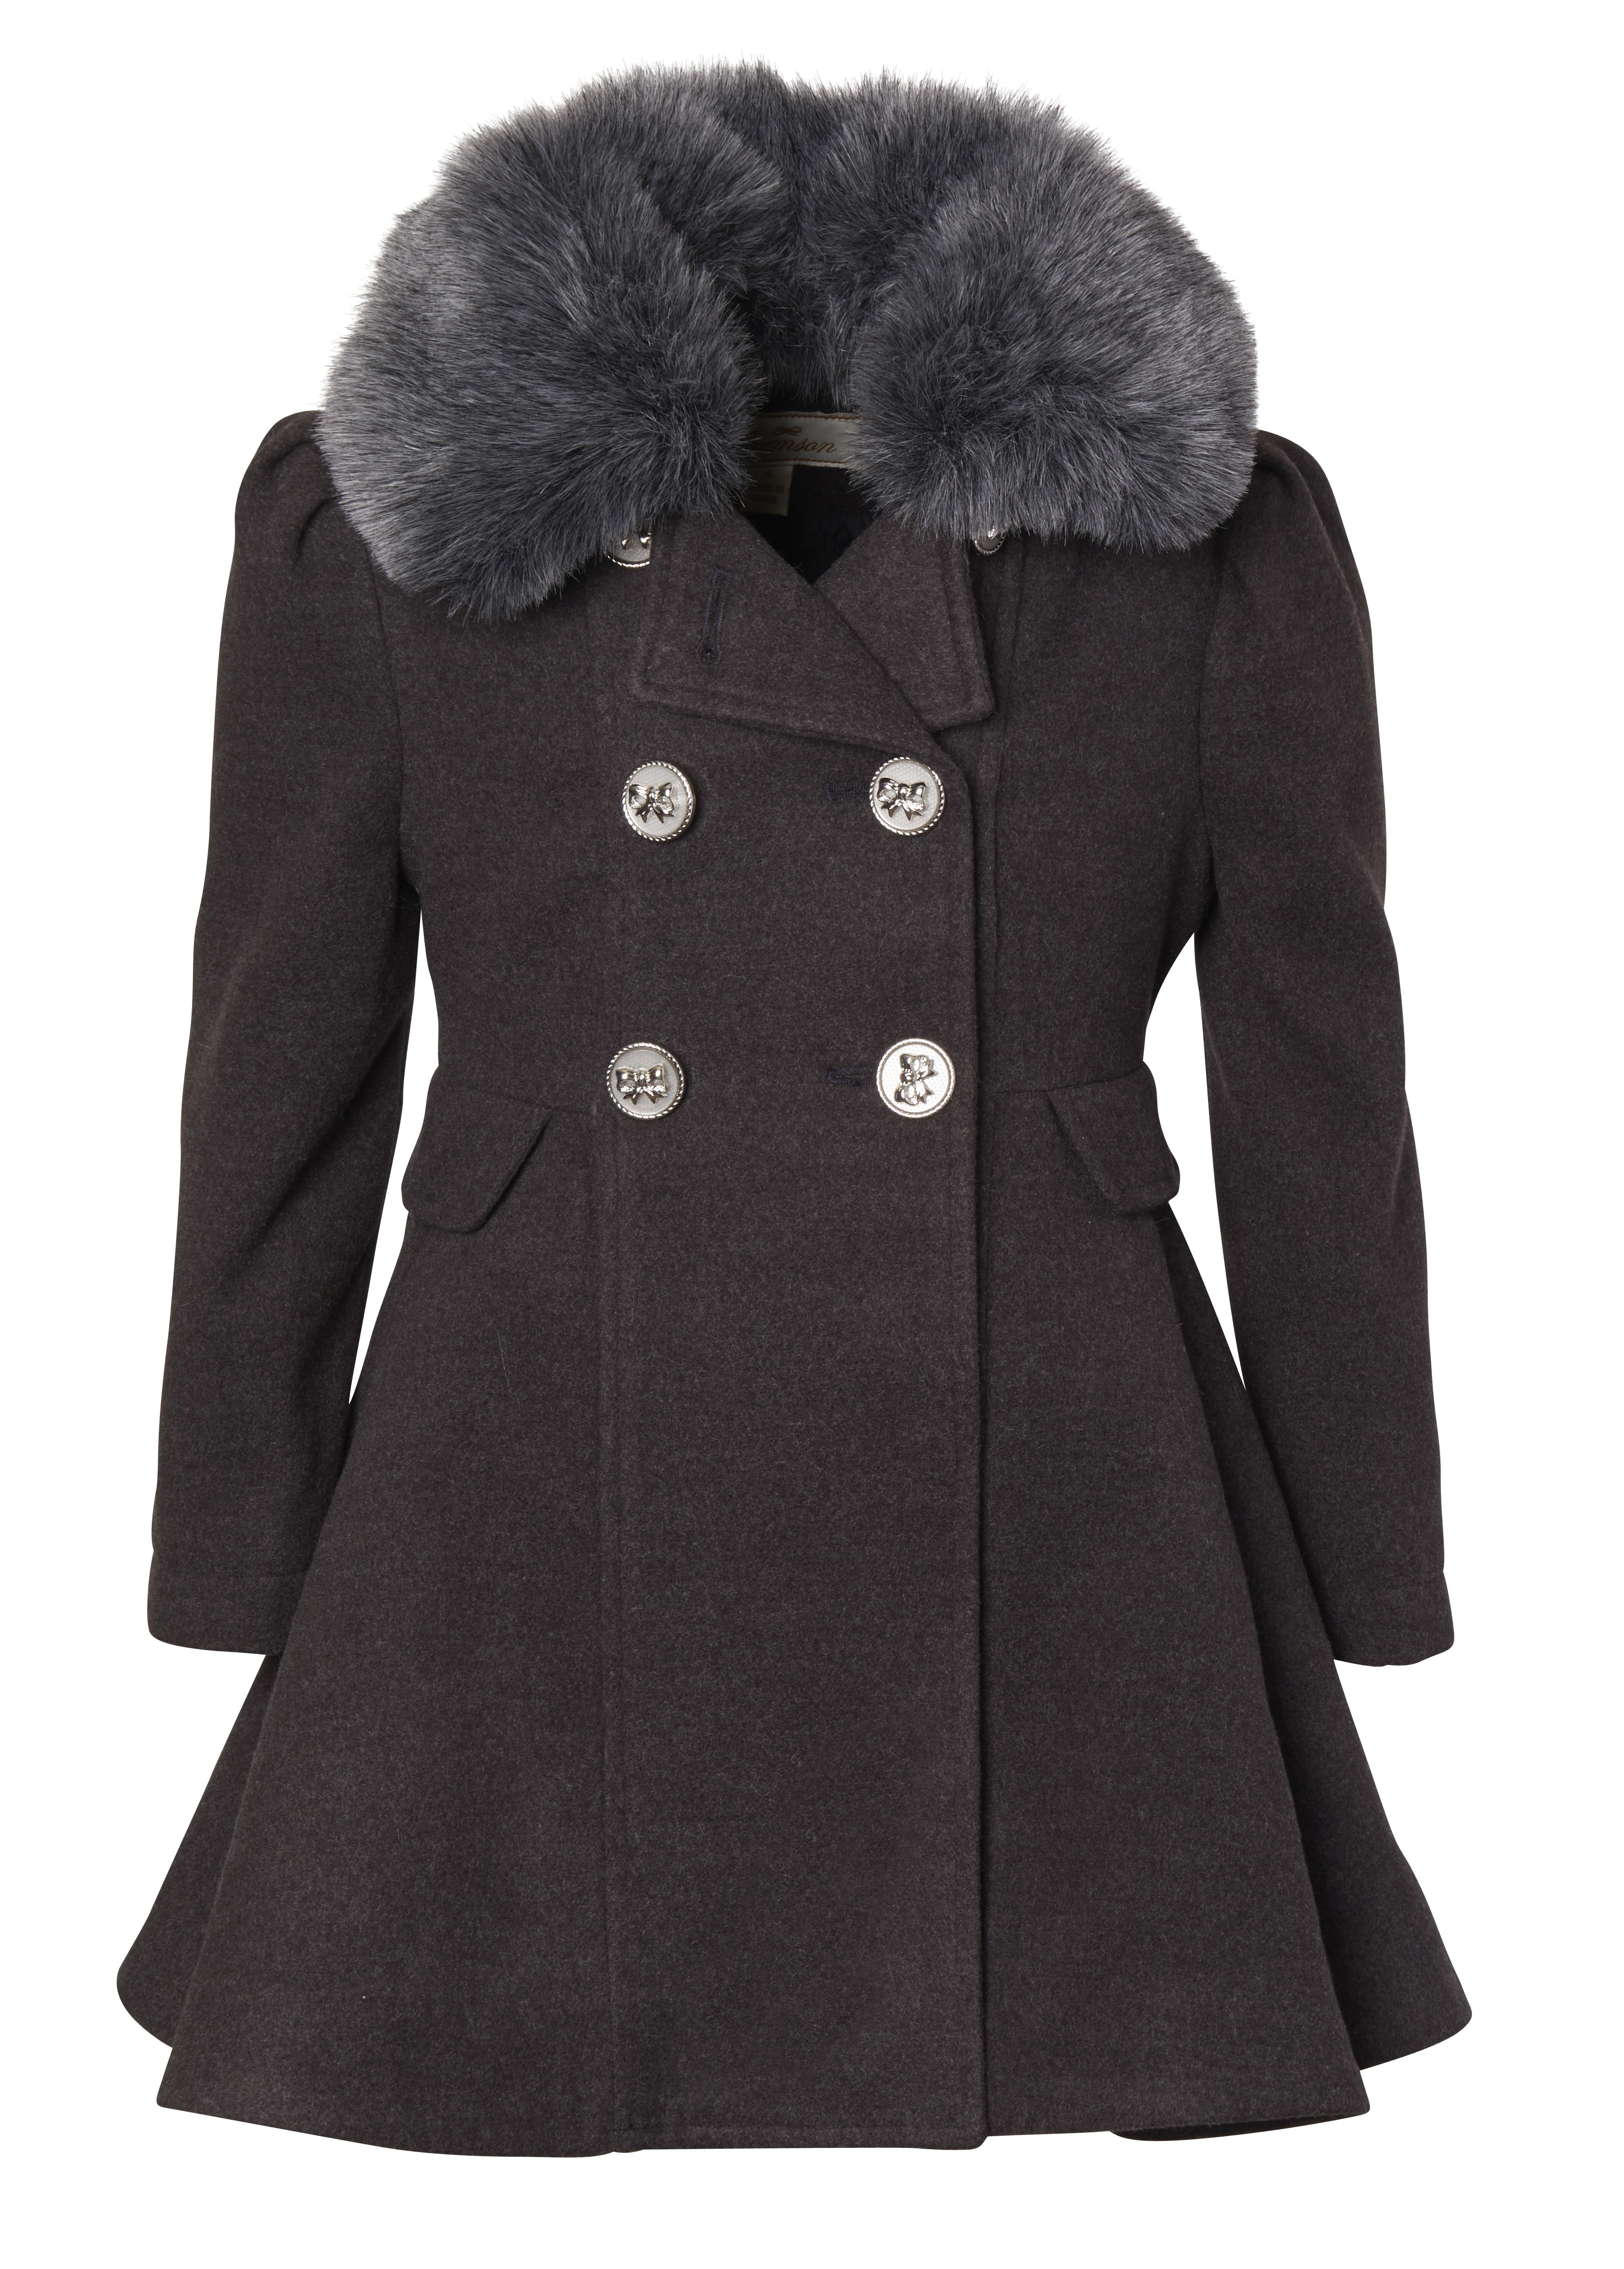 Cremson Girls Wool Blend Hooded Ruffle Winter Dress Pea Coat Jacket 